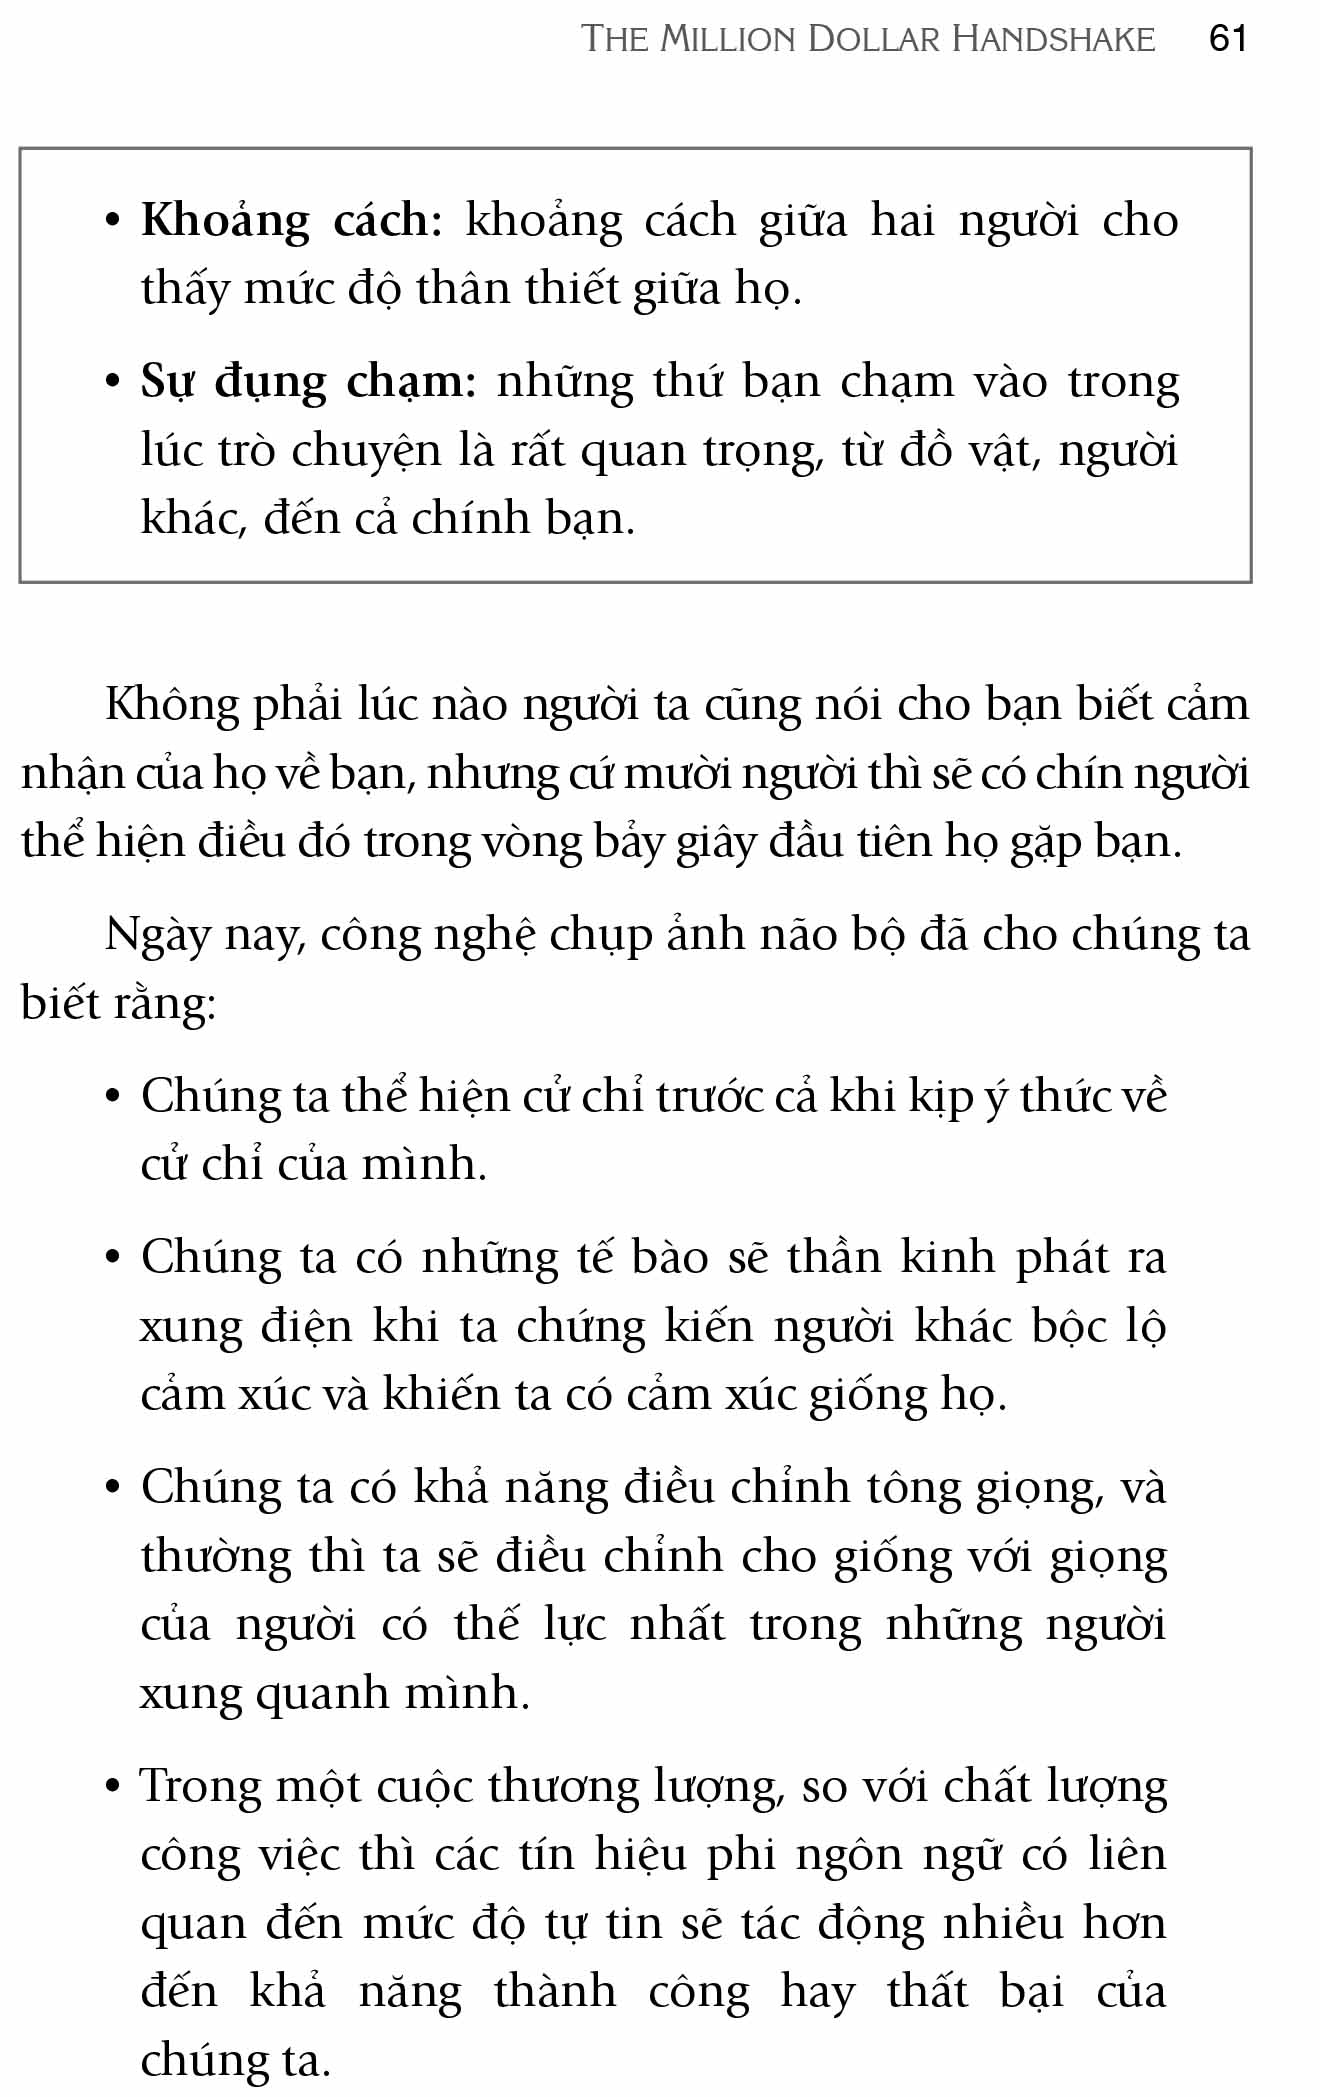 Cái Bắt Tay Triệu Đô - The Million Dollar Handshake PDF